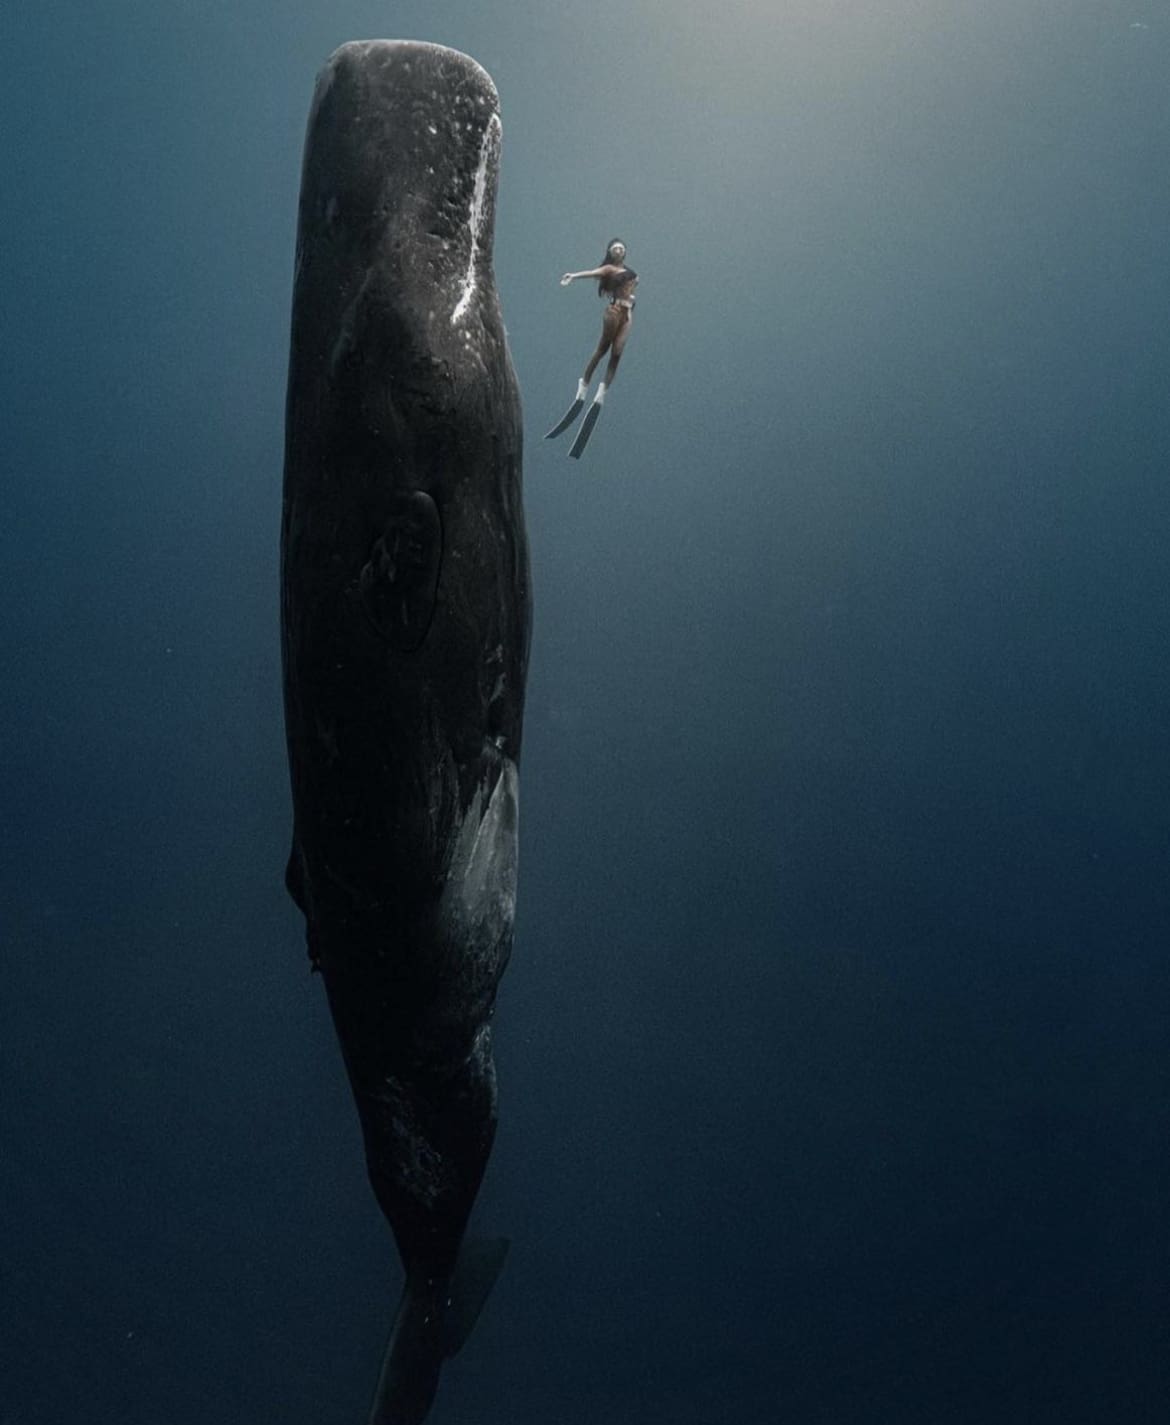 Size comparison with sperm whale